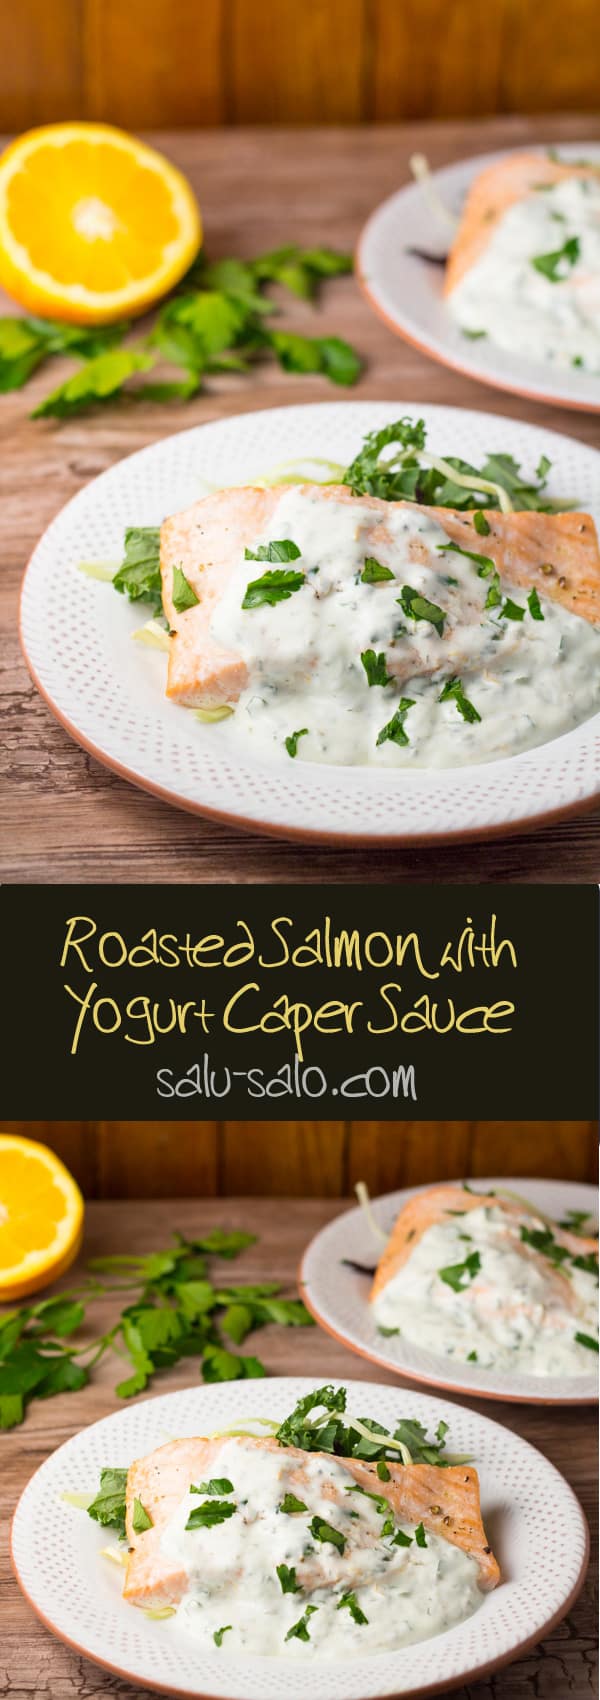 Roasted Salmon with Yogurt Caper Sauce